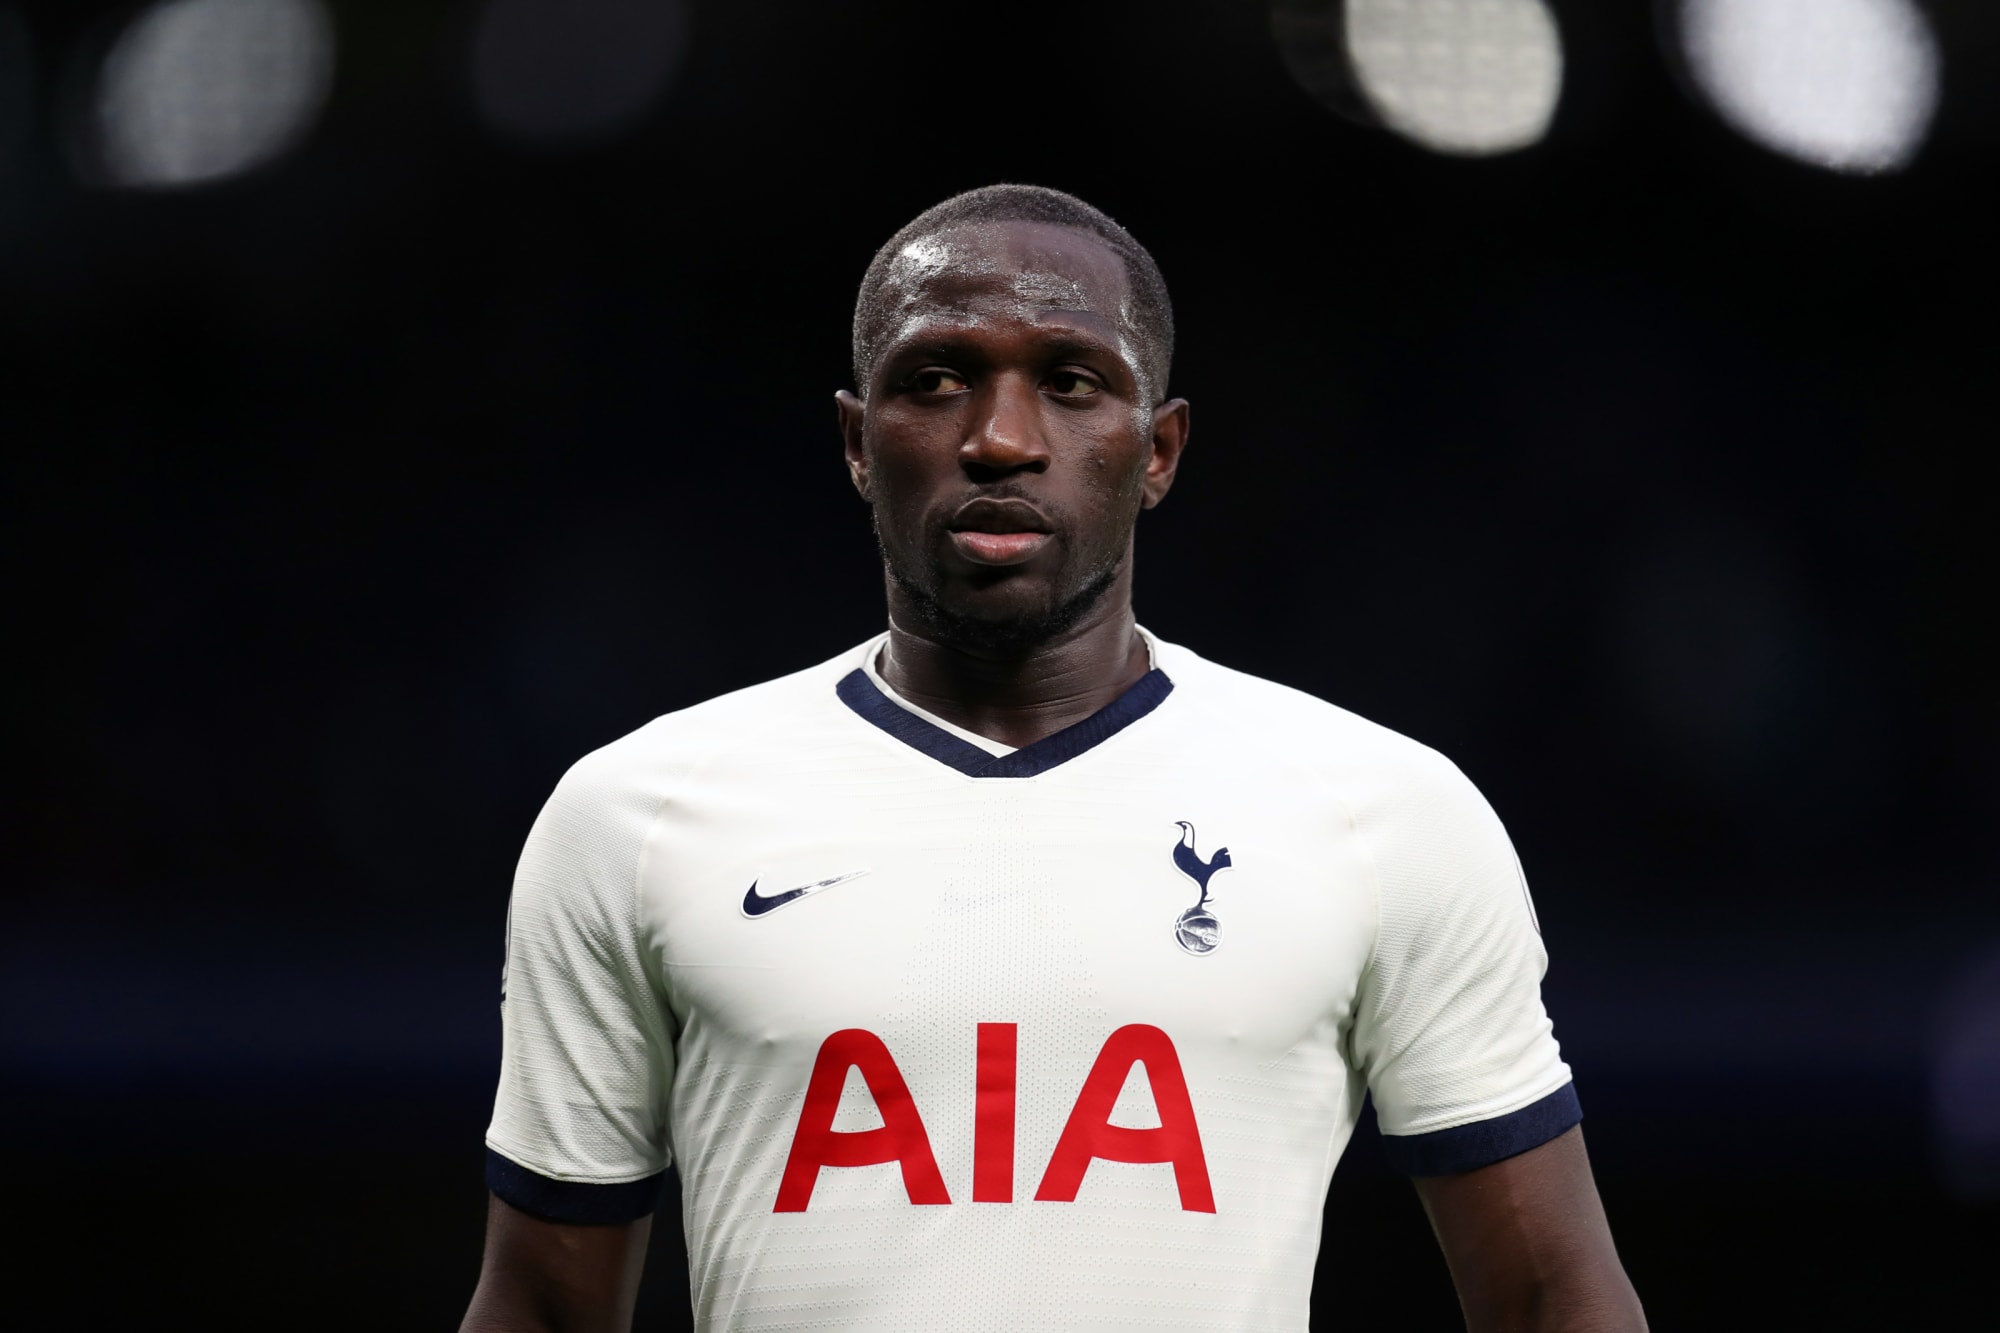 Moussa Sissoko's return can help stabilize Tottenham's midfield